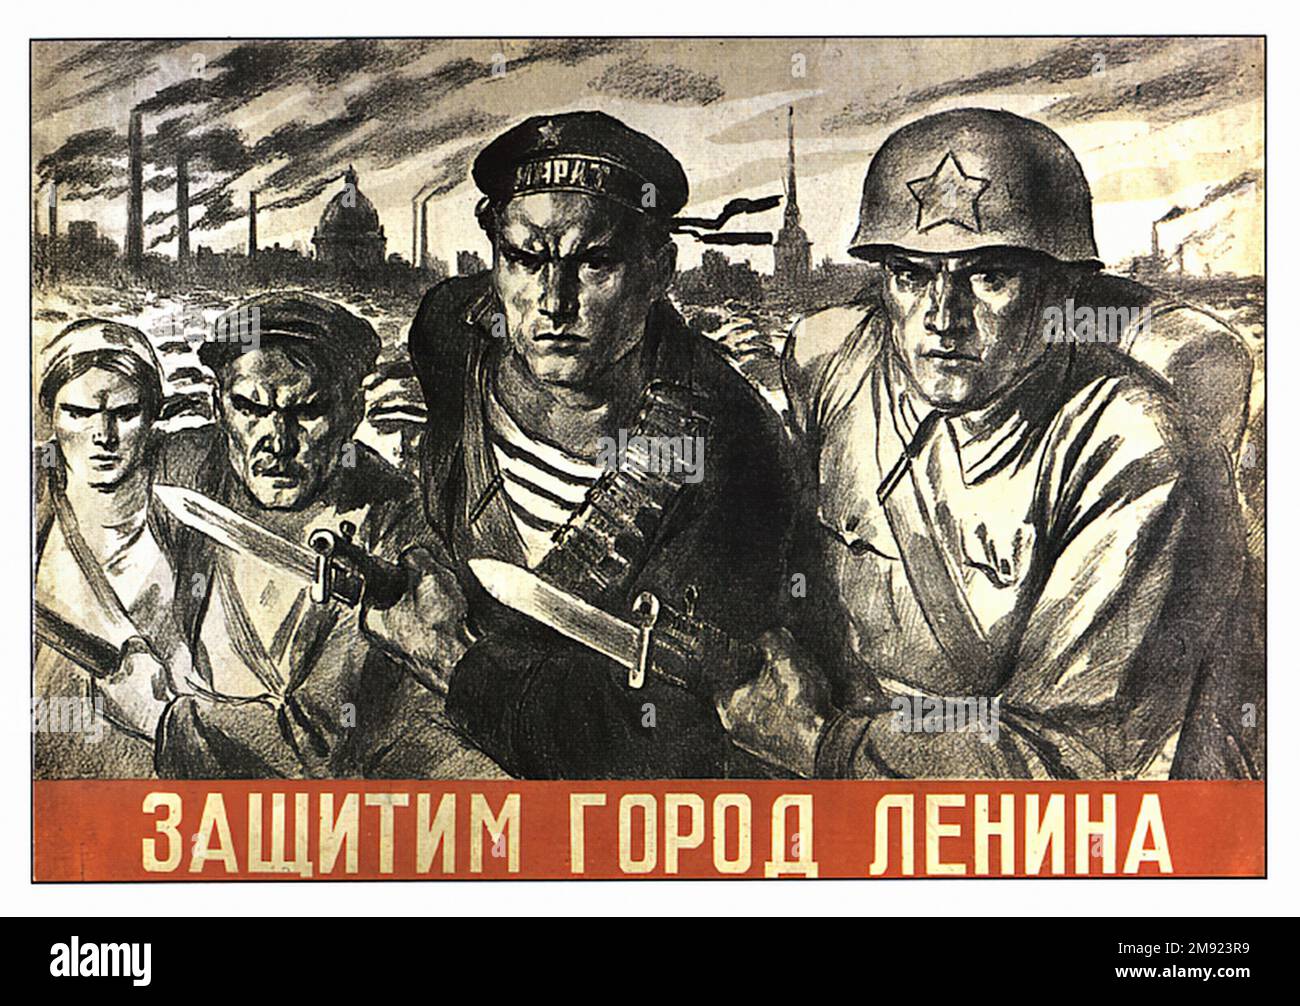 Defending The City Of Leningrad  (Translated from Russian) - Vintage USSR soviet propaganda poster Stock Photo